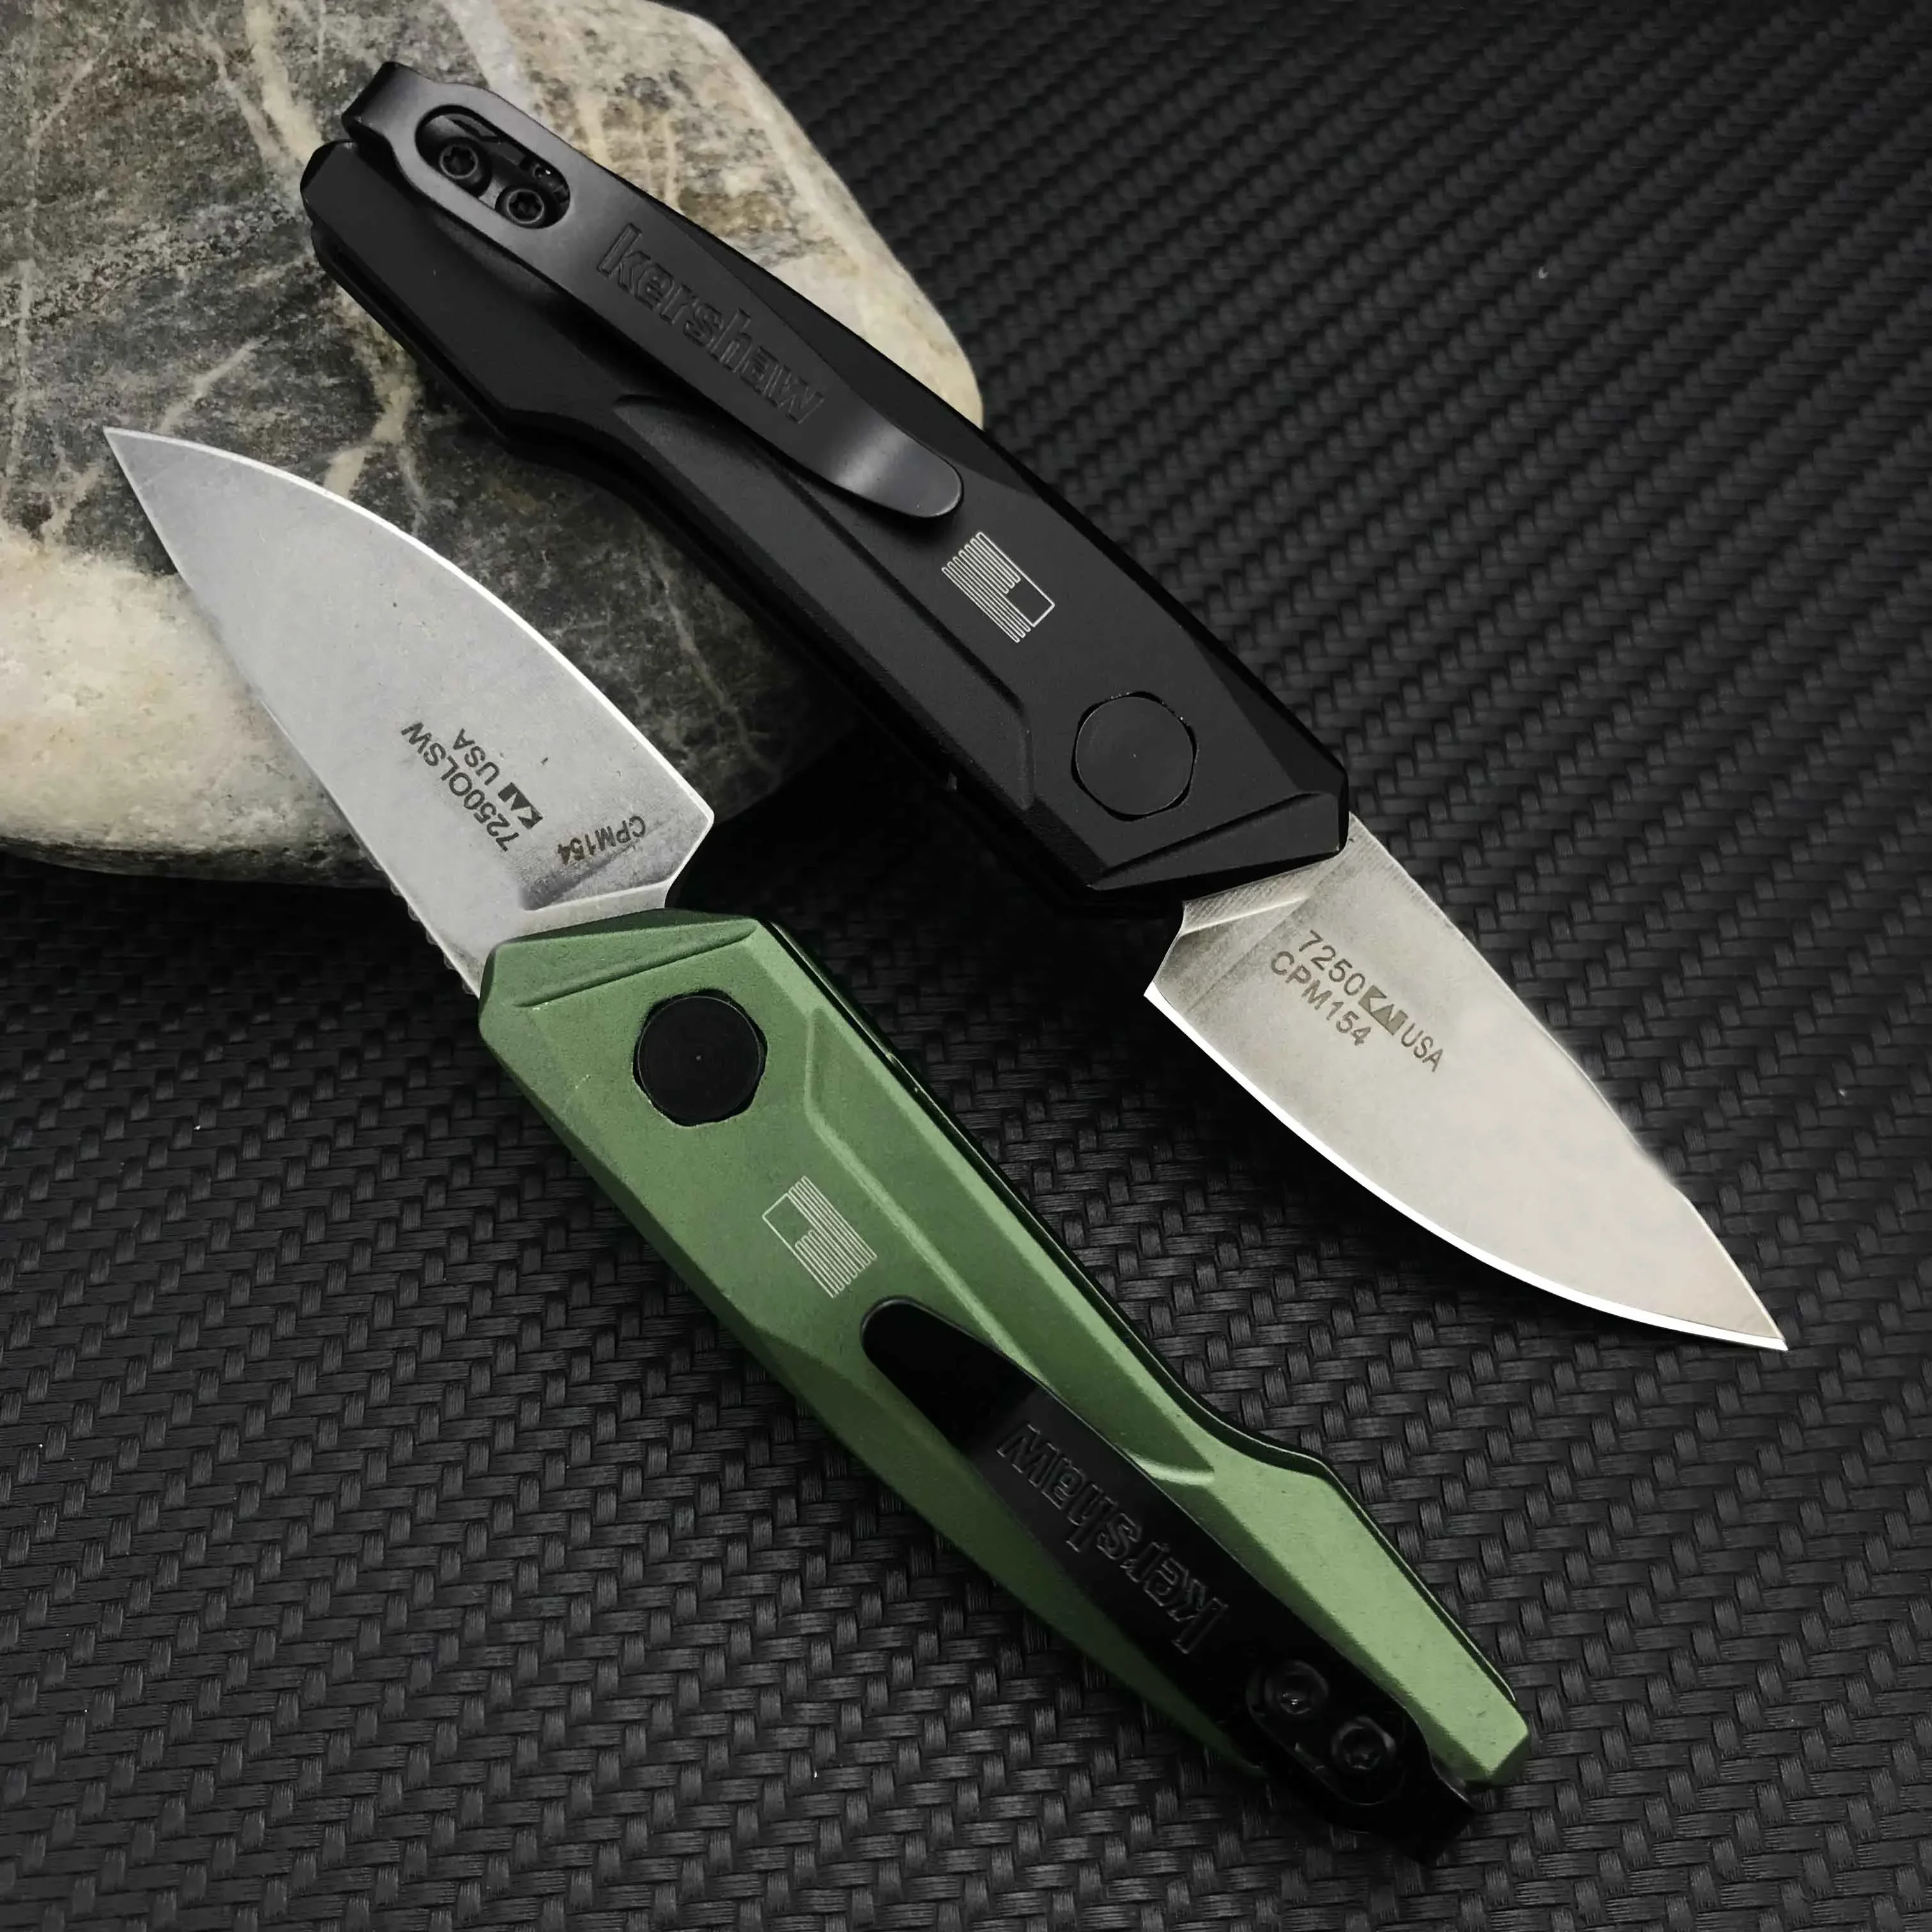 

Kershaw 7250 Launch 9 Folding Knife Mini Pocket Tactical Survival Hunting Knives CPM 154 Blade 6061-T6 Aluminum Handle Edc Tool